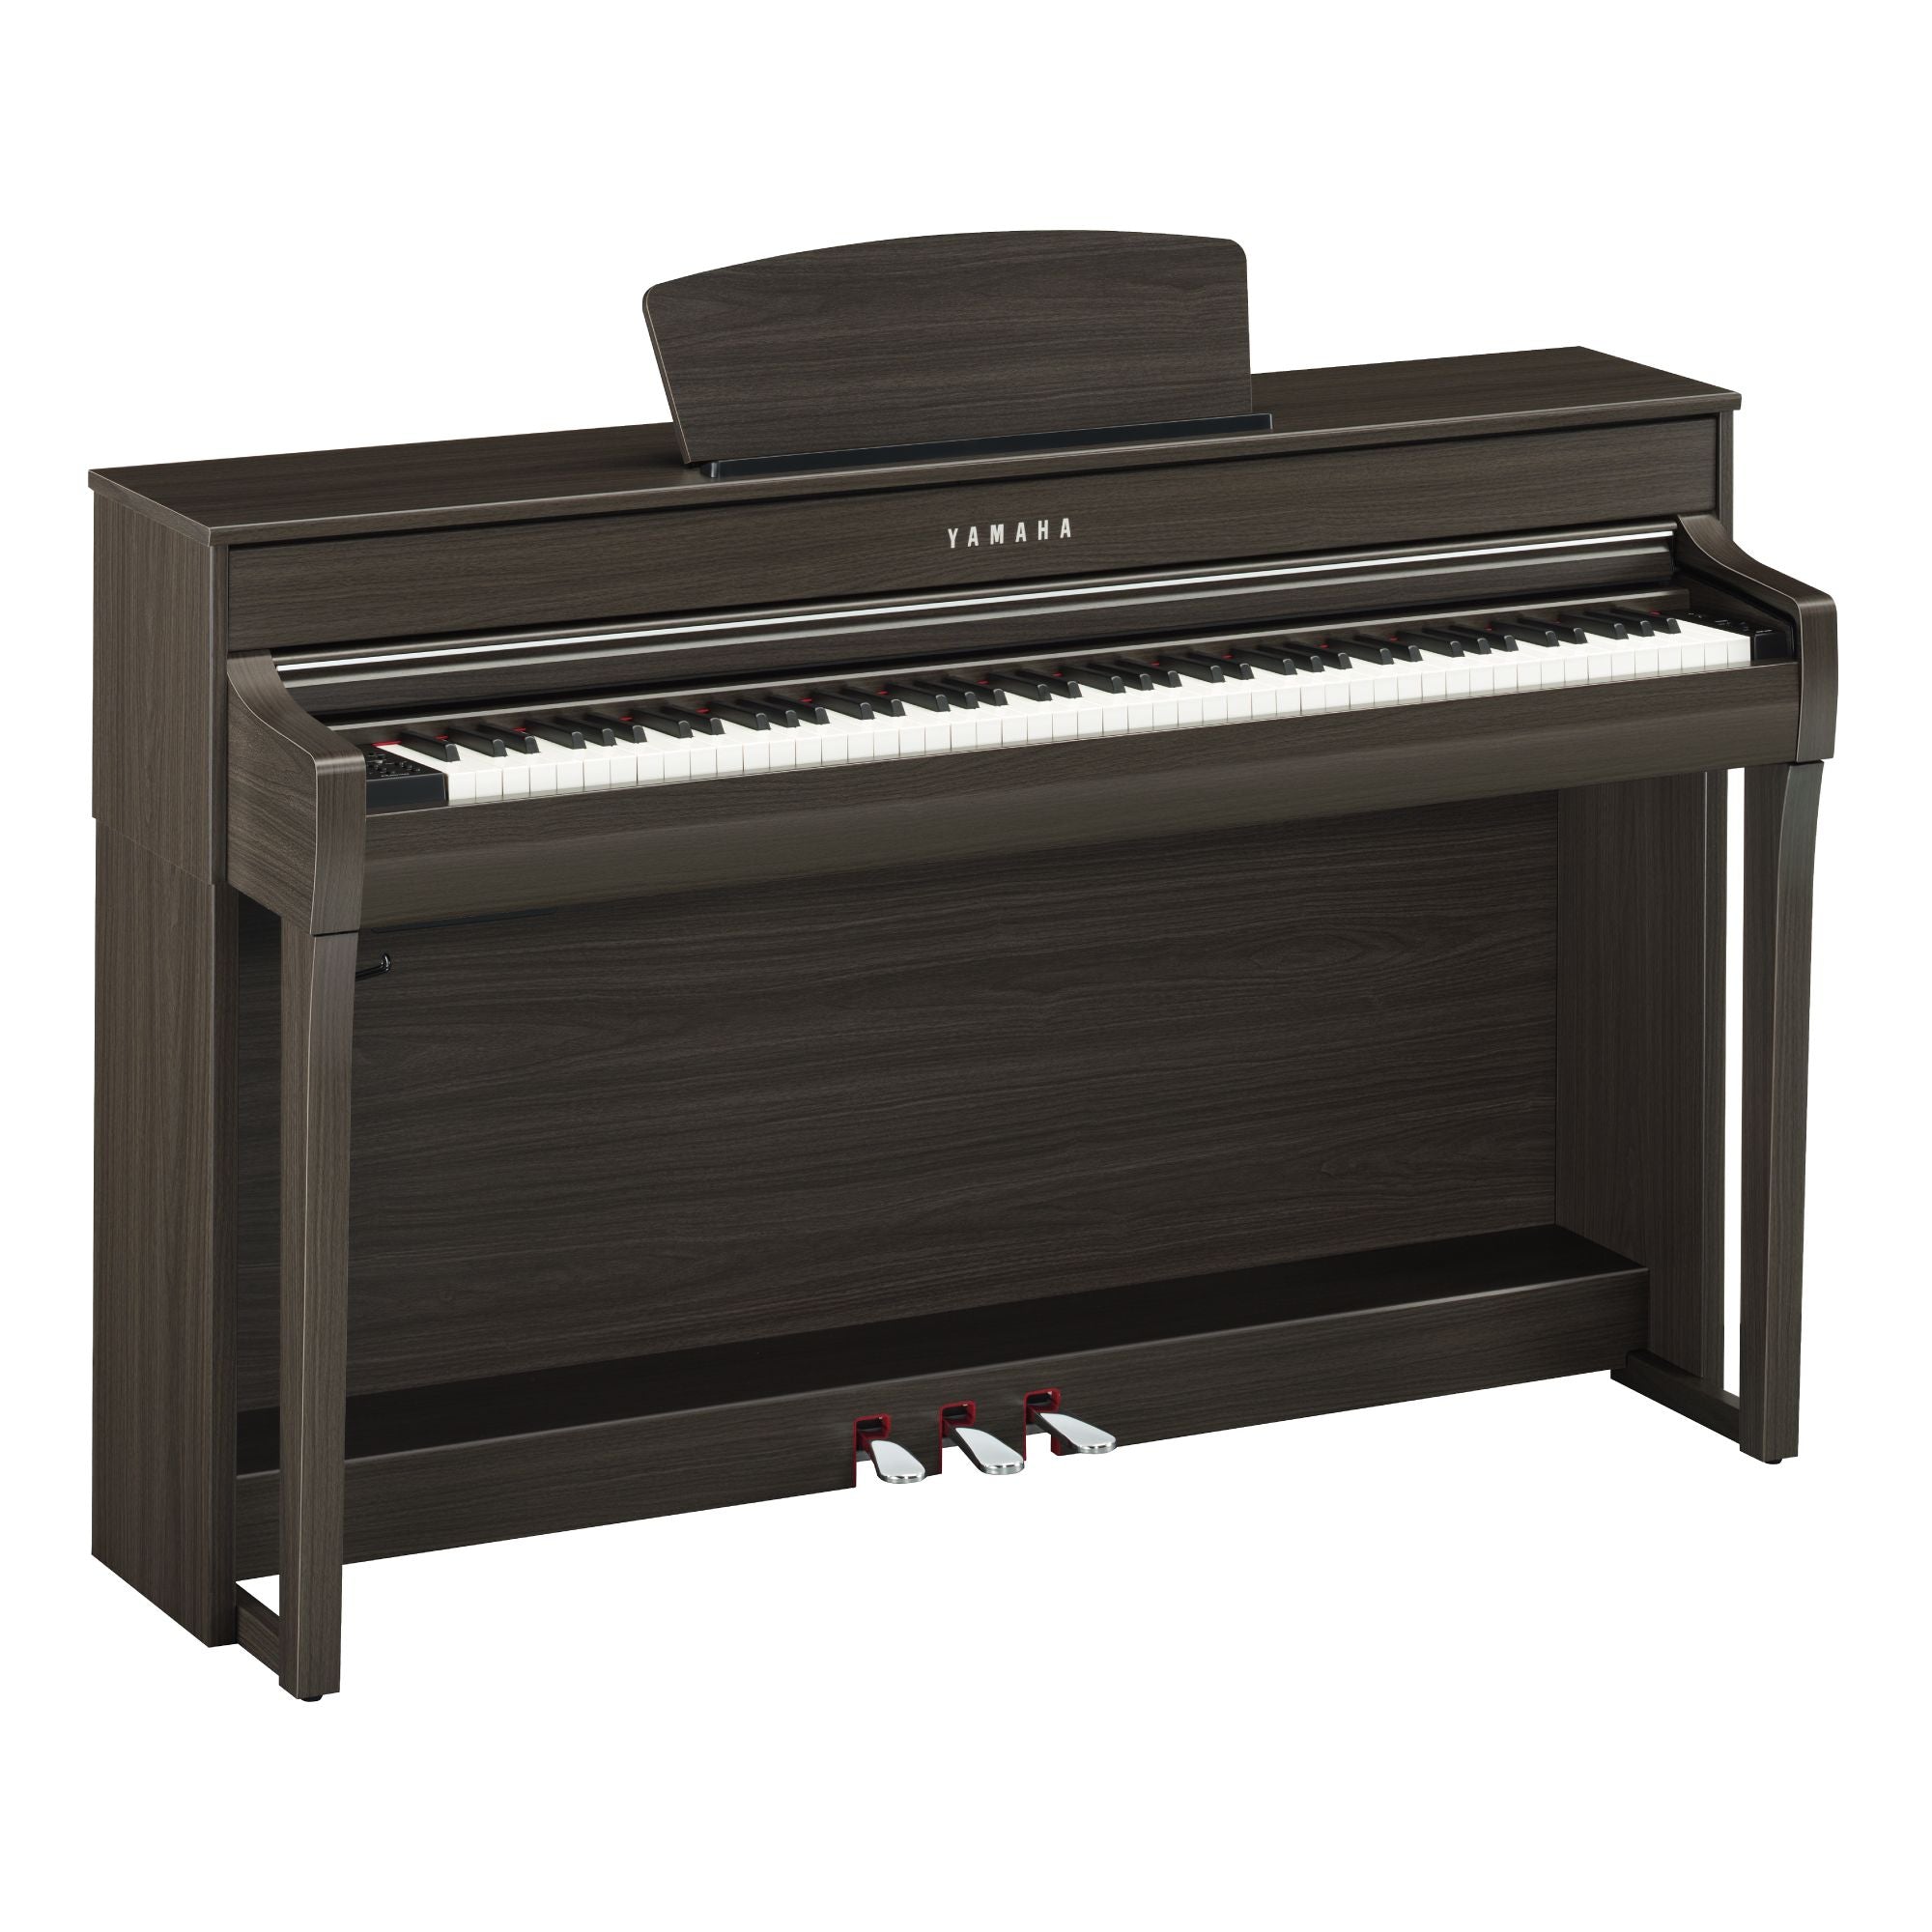 Yamaha CLP-735 Clavinova Digital Piano with Matching Bench